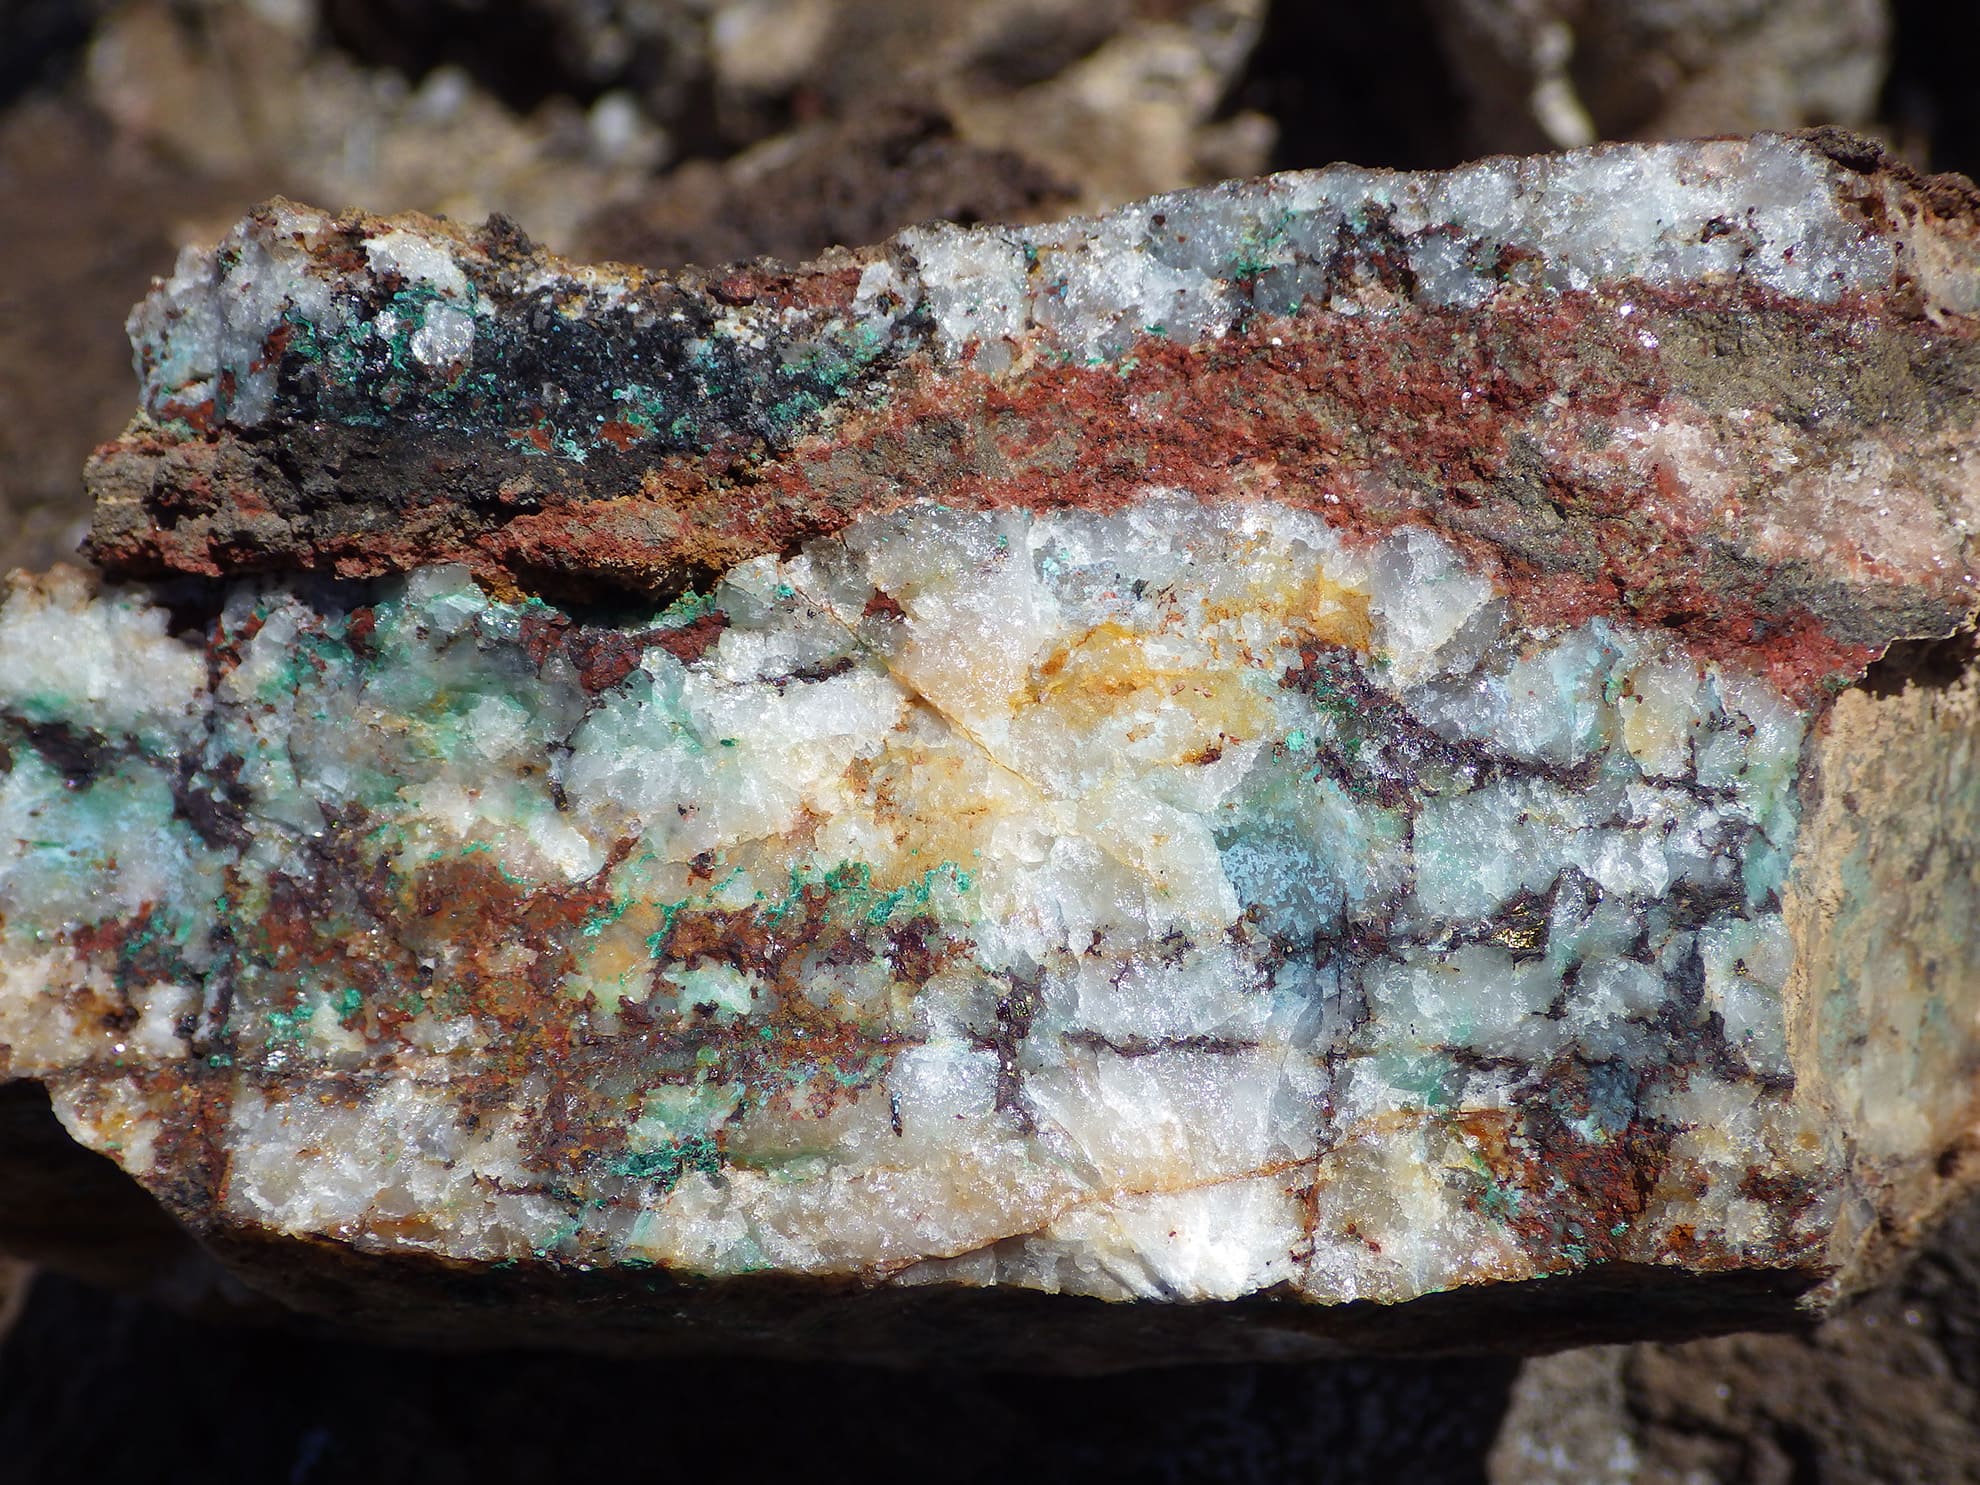 Quartz vein with garnet and chalcopyrite (copper sulfide), and glassy limonite replacing chalcopyrite, East Zone